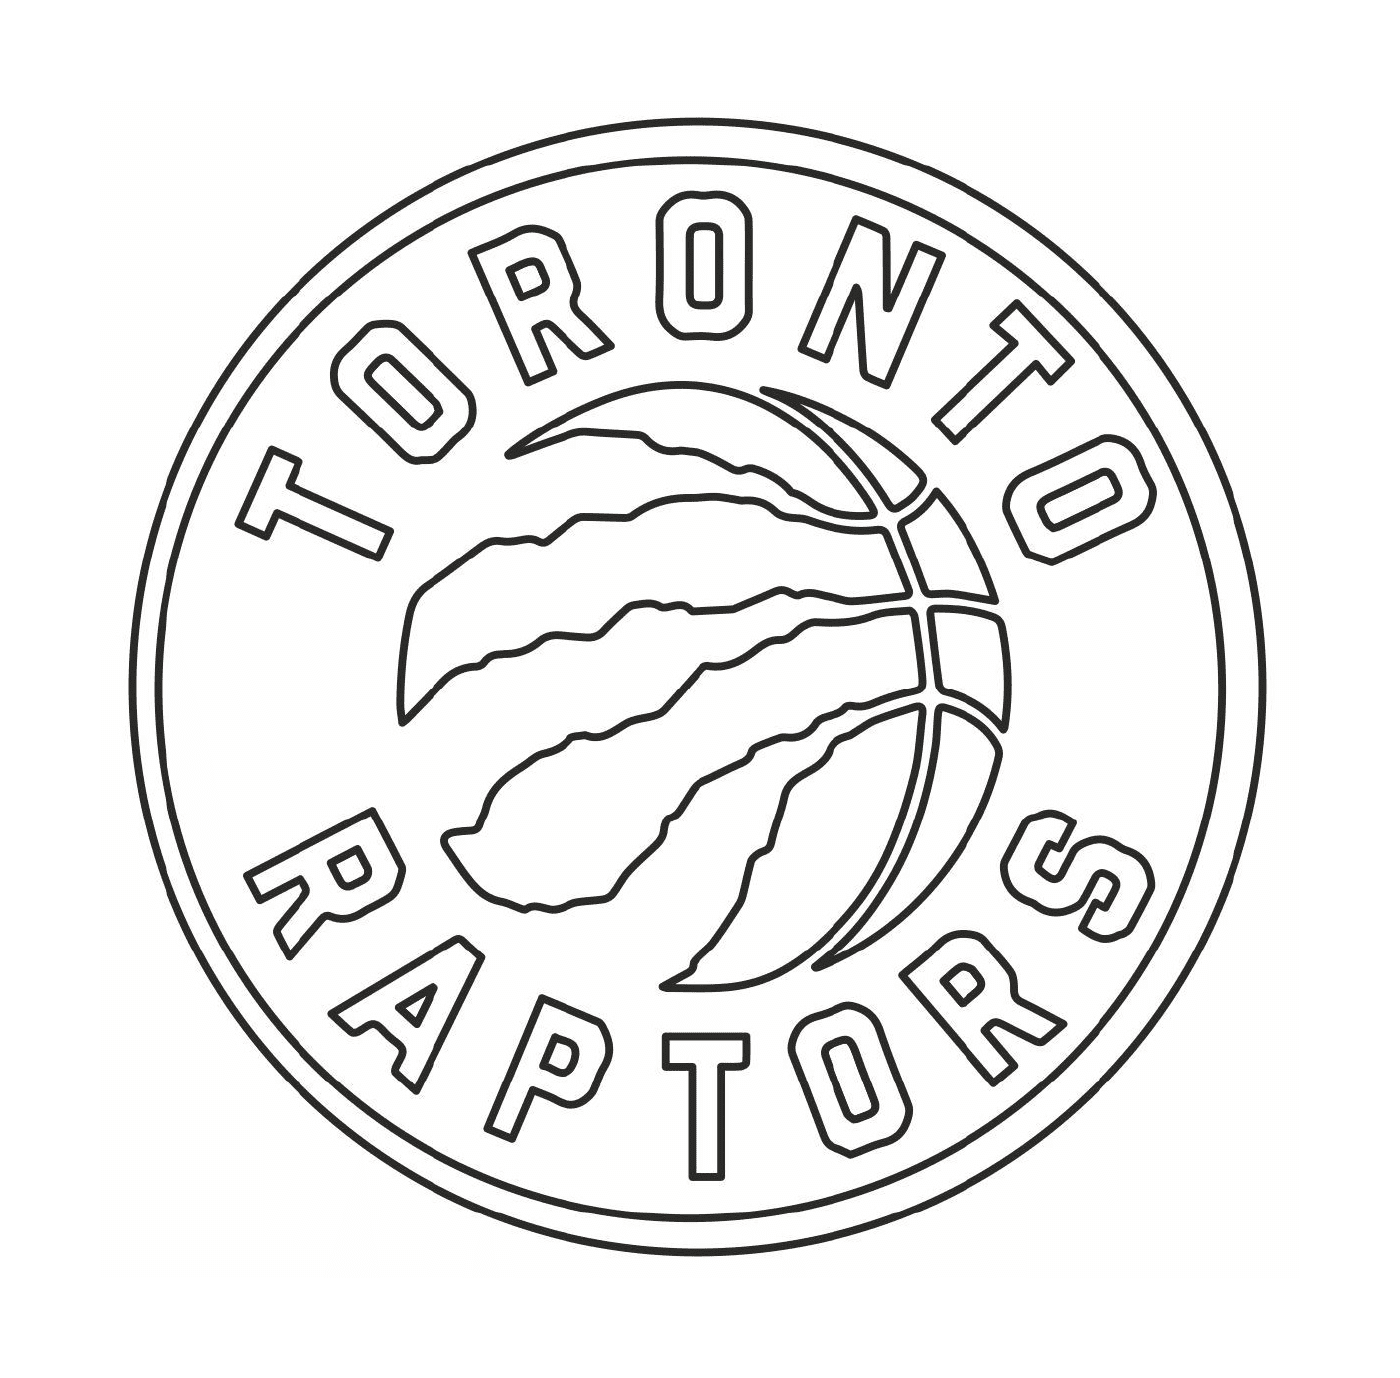  The Toronto Raptors logo, basketball team 